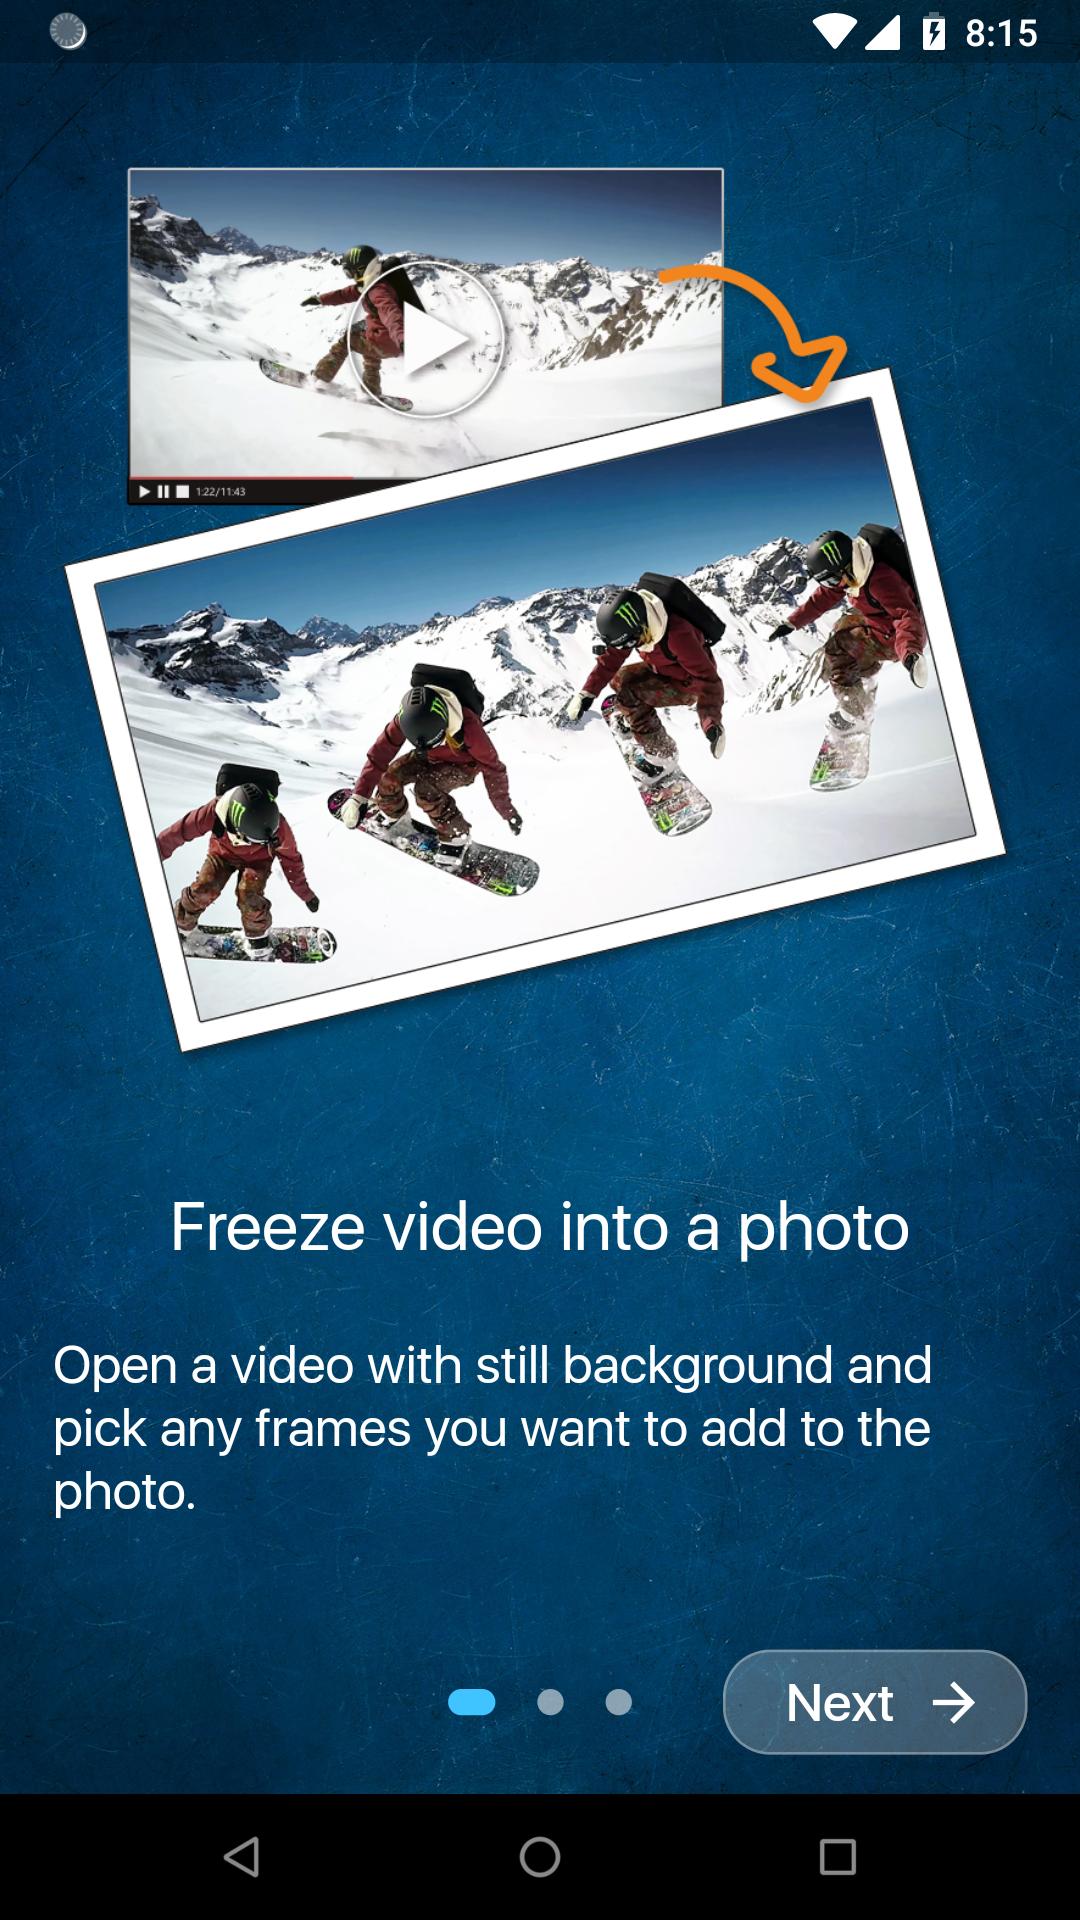 Freeze video